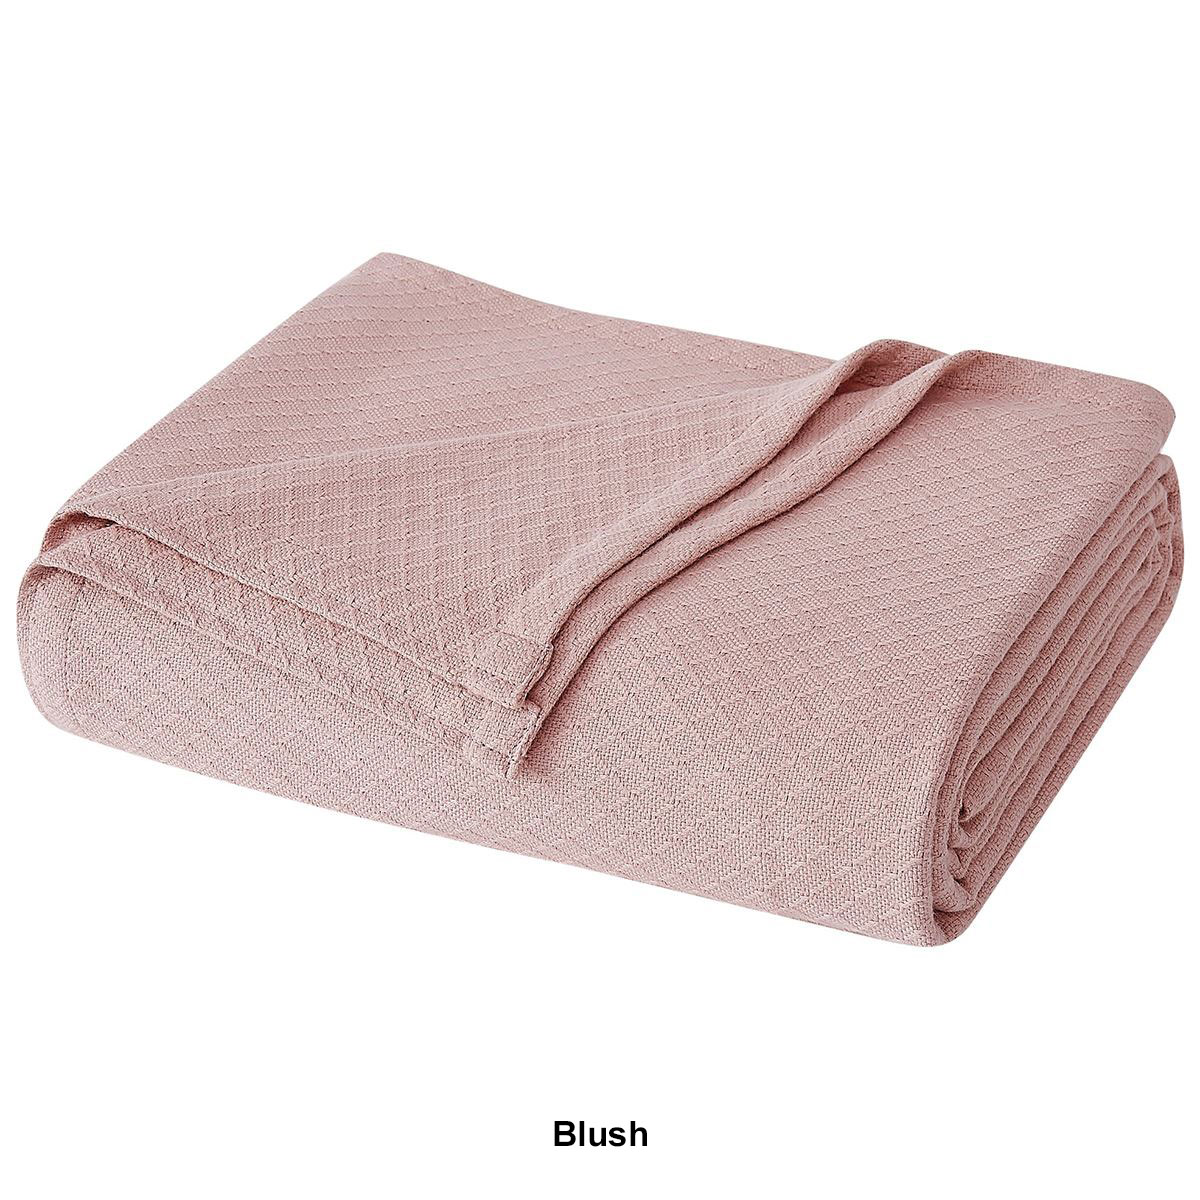 Charisma Deluxe Woven Blanket